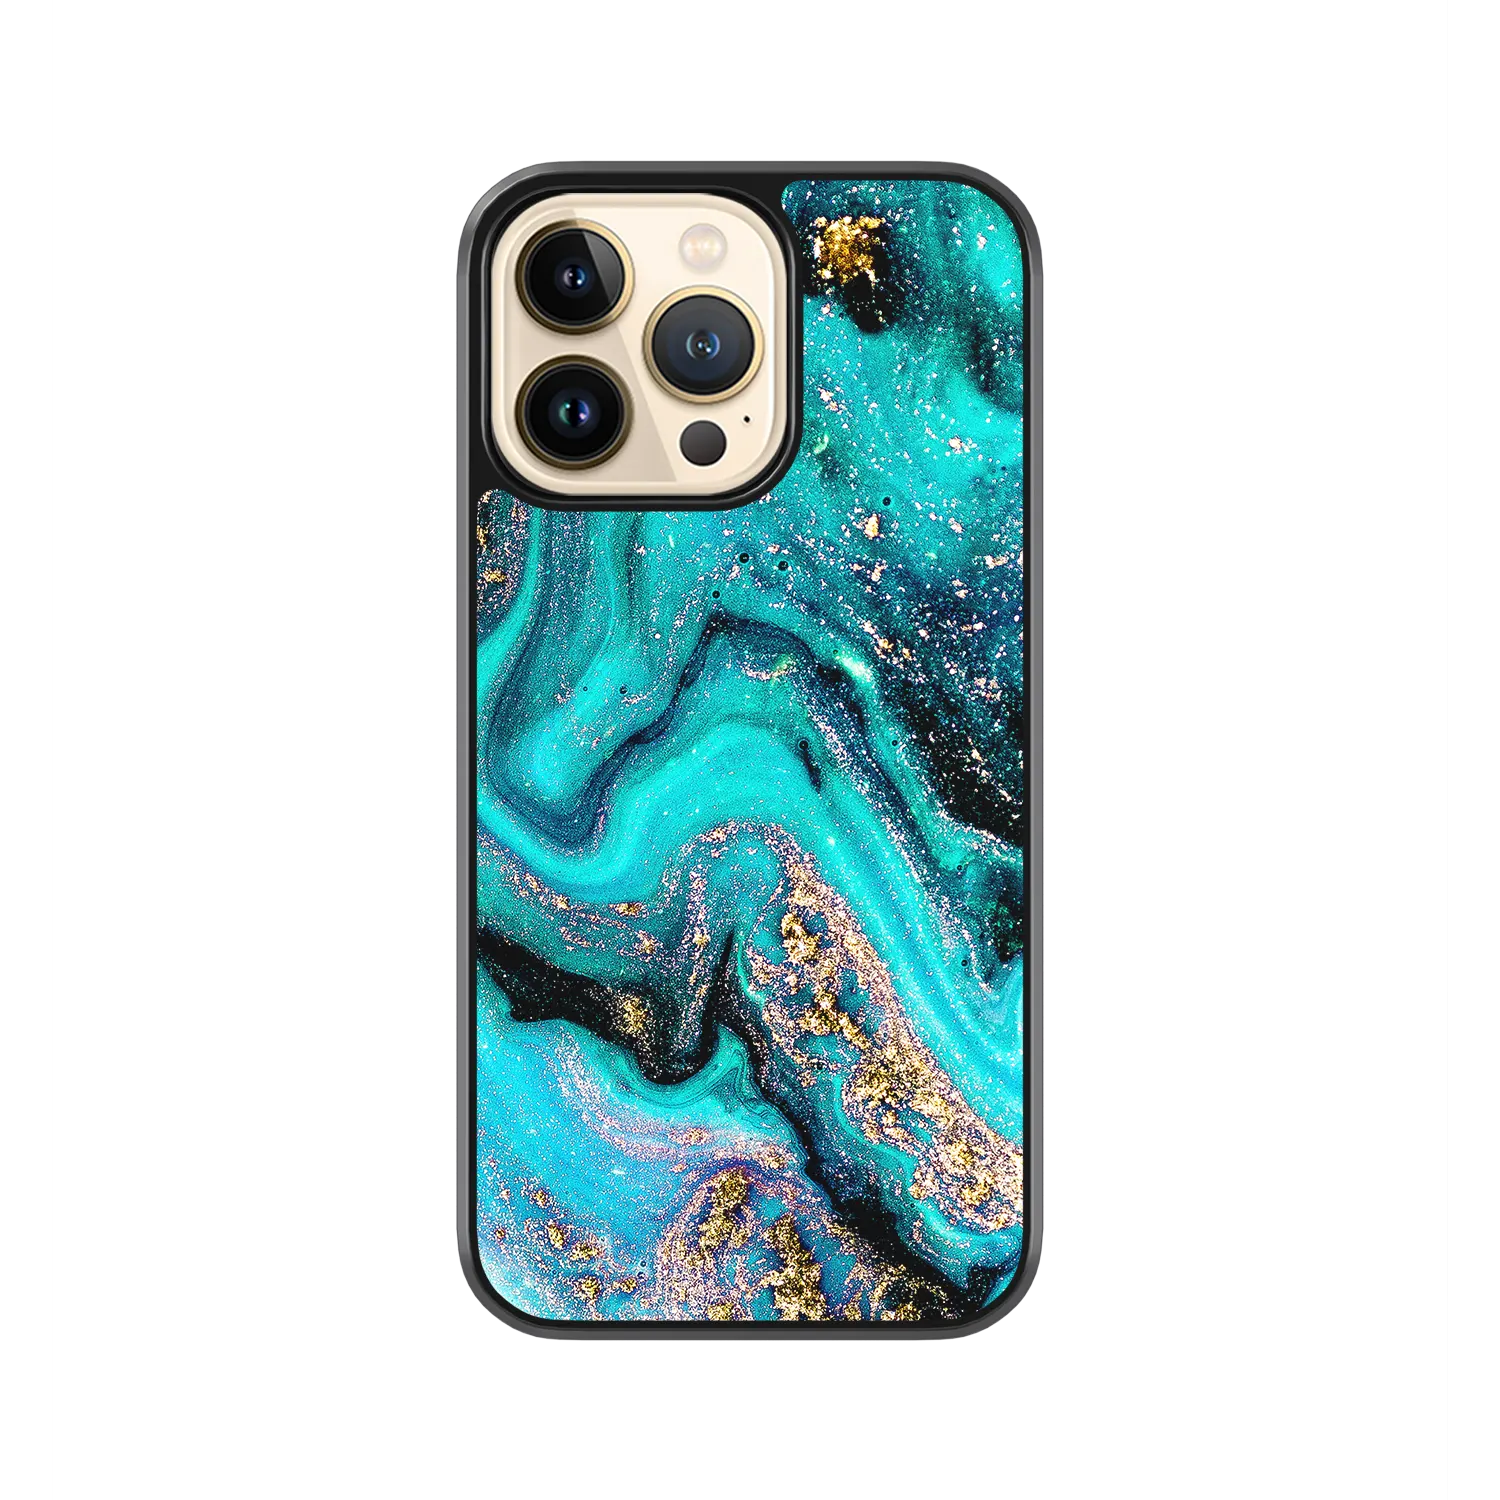 Tourquoise iPhone 11 Pro Max Case